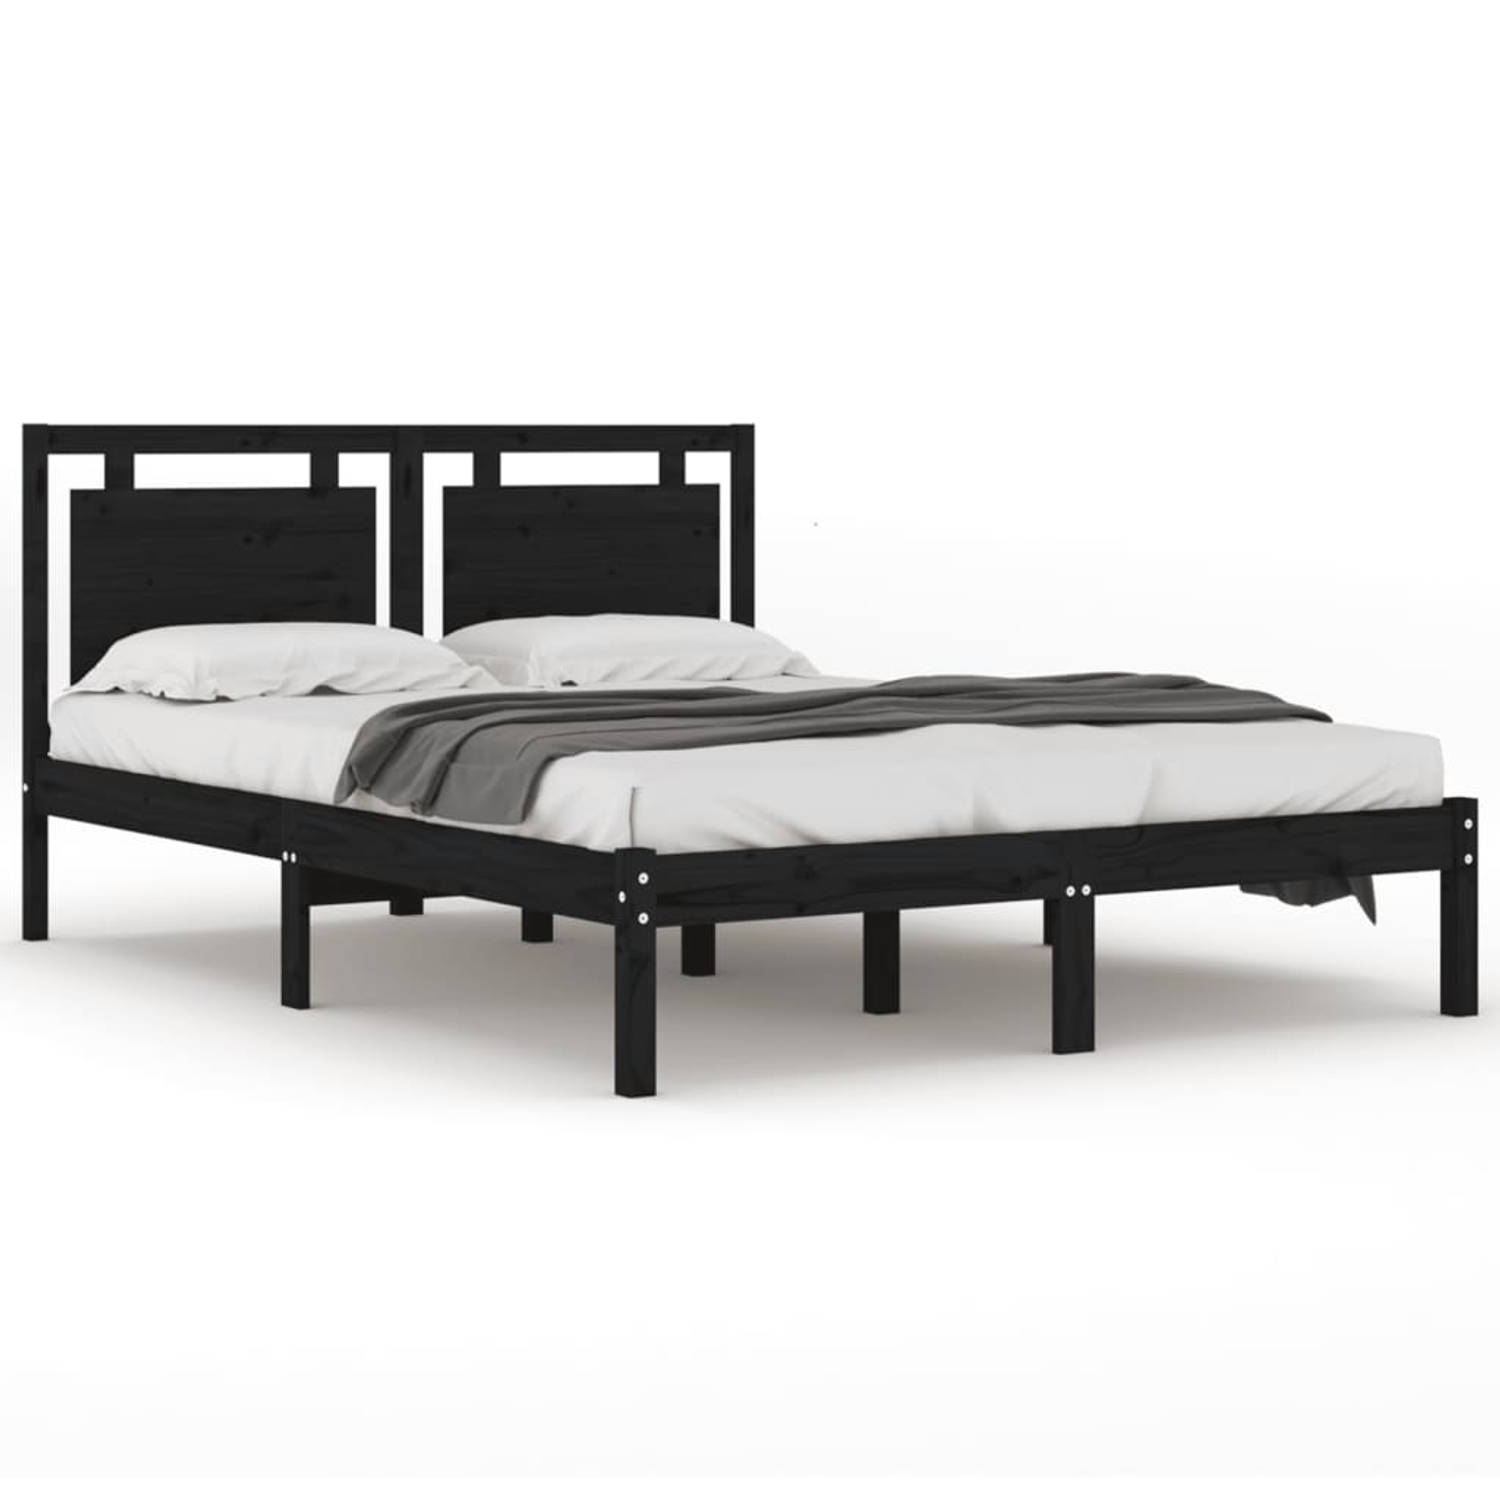 The Living Store Bedframe massief hout zwart 160x200 cm - Bedframe - Bedframes - Tweepersoonsbed - Bed - Bedombouw - Dubbel Bed - Frame - Bed Frame - Ledikant - Houten Bedframe - T